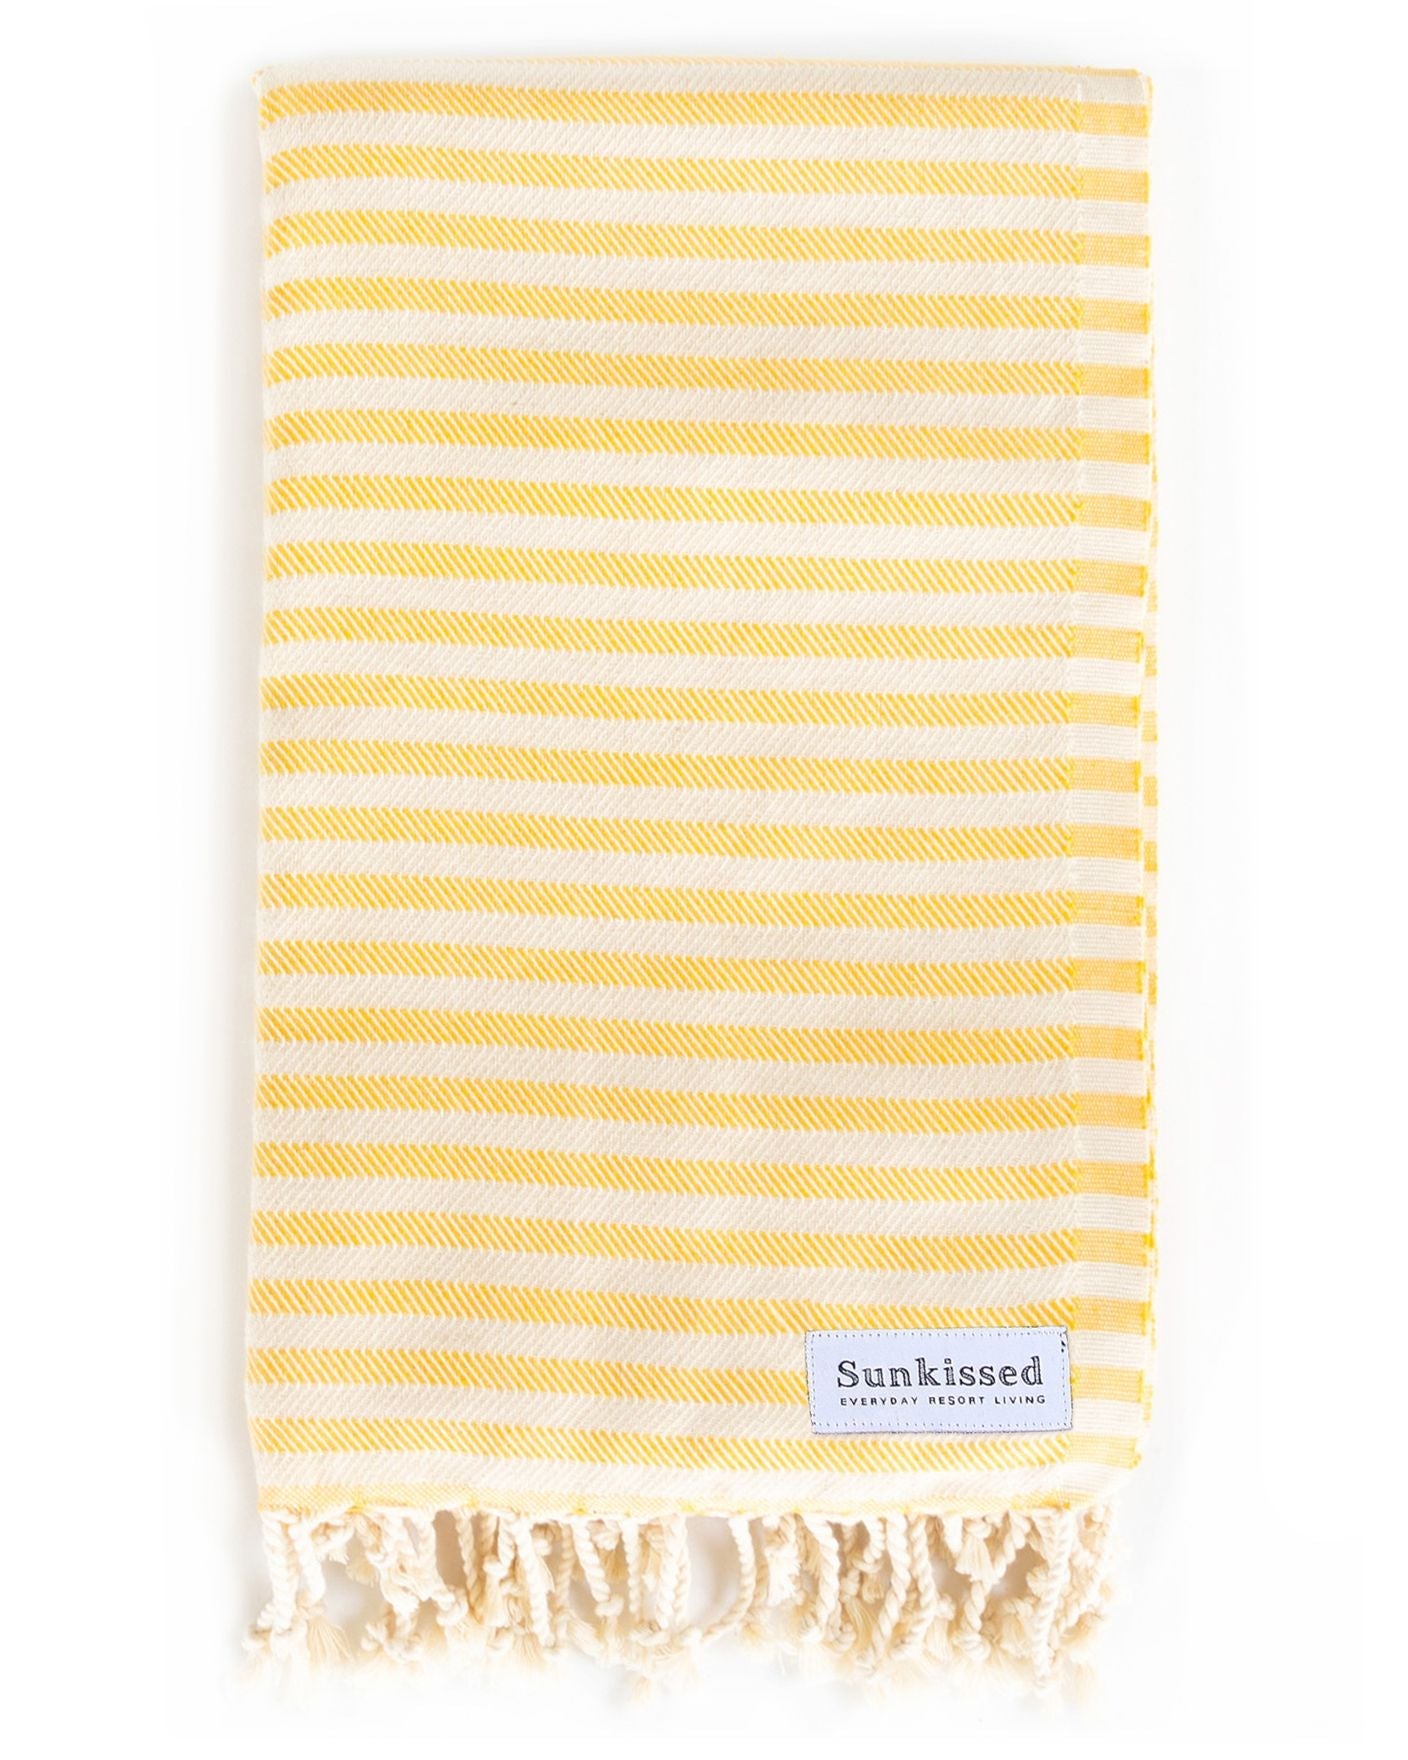  Marbella • Sand Free Beach Towel by Sunkissed Sunkissed Perfumarie